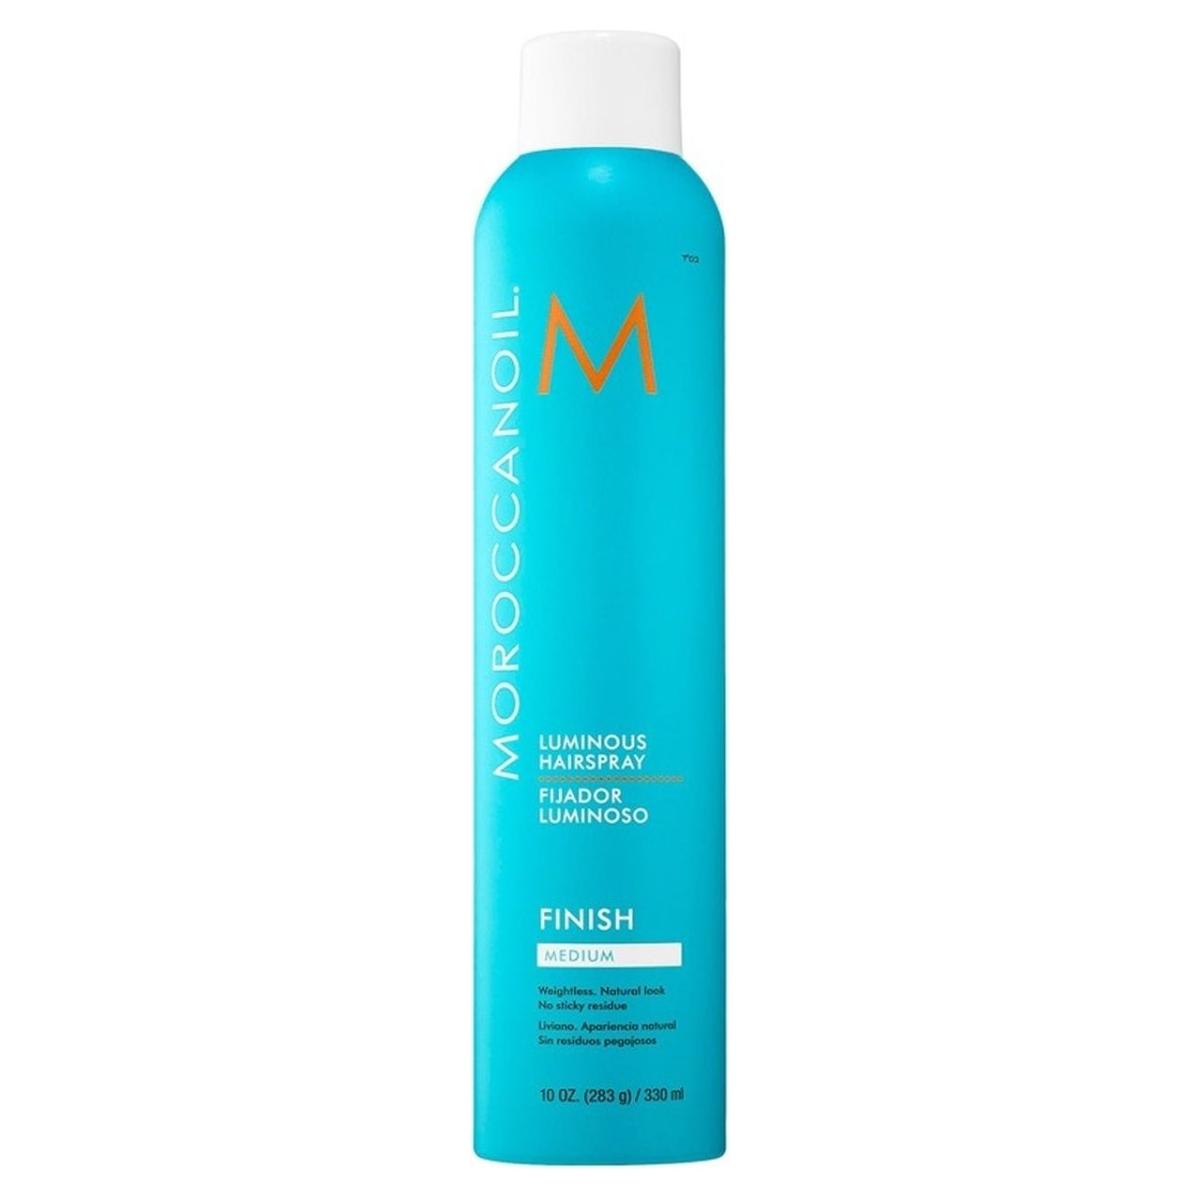 Moroccanoil | Luminous Hairspray - Medium Finish | 330ml - DG International Ventures Limited